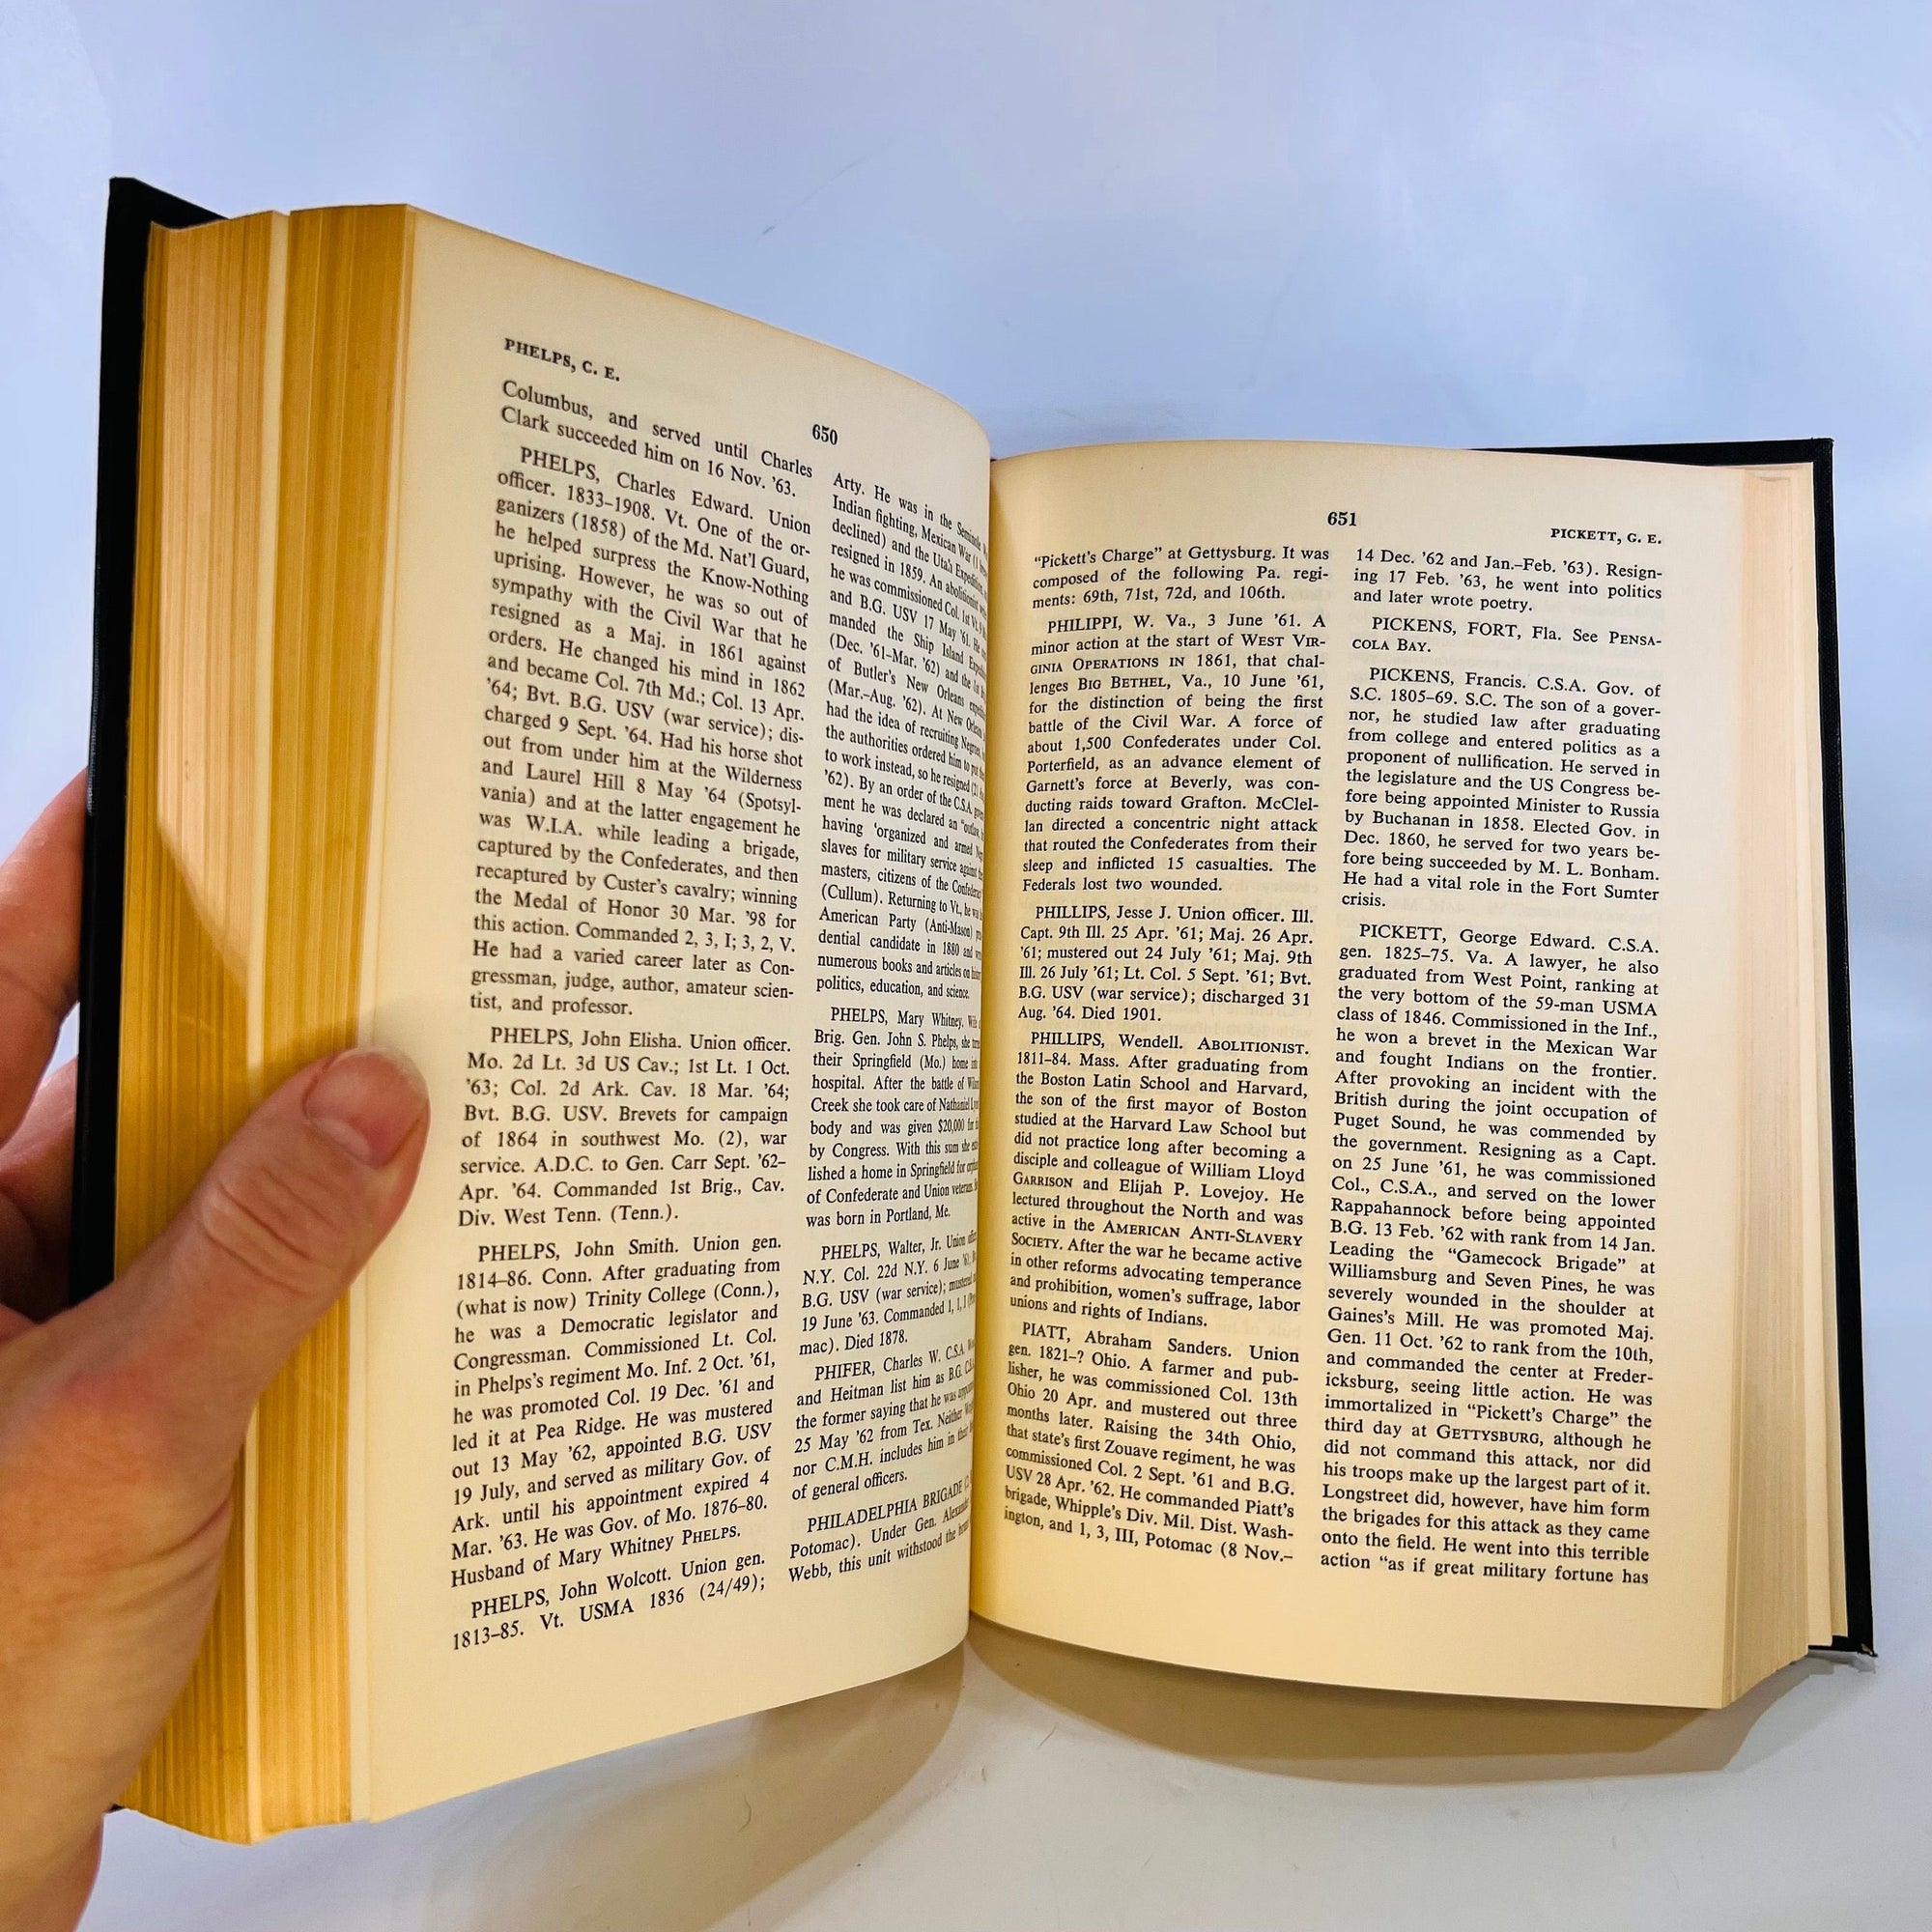 The Civil War Dictionary by Mark Mayo Boatner 1962 David McKay Company Inc Vintage Book